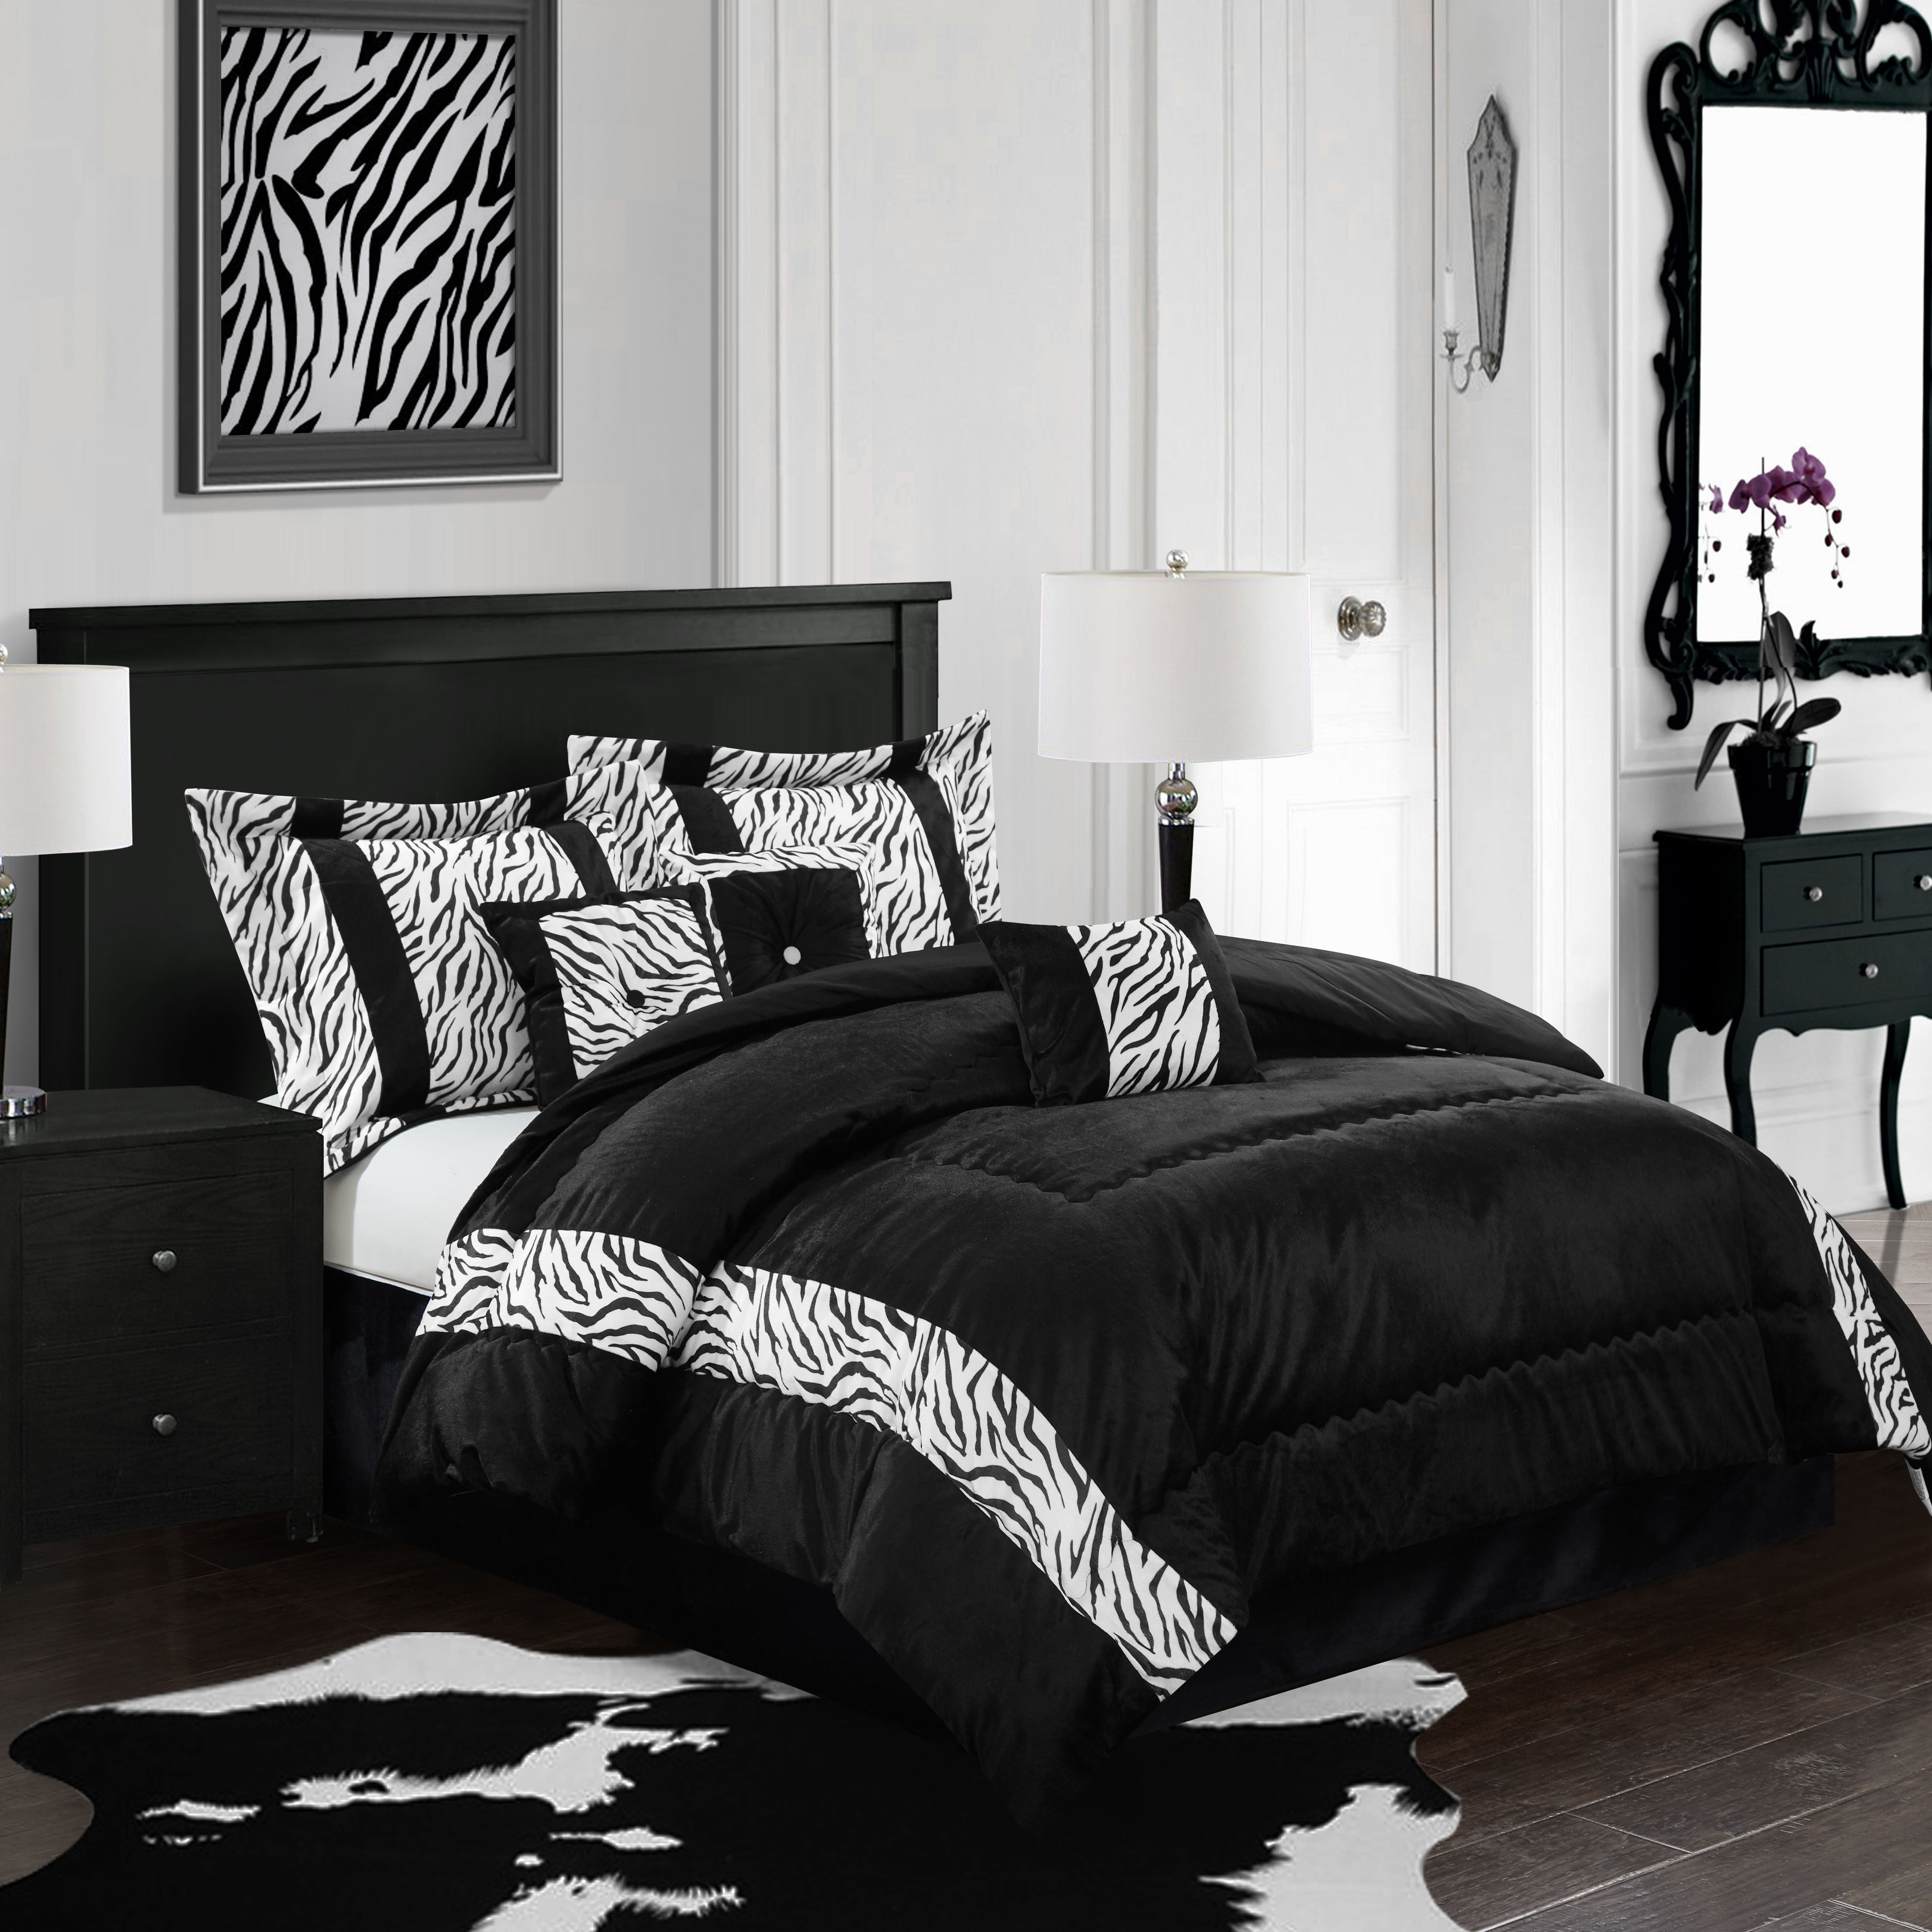 Mali 7-Piece Bedding Comforter Set, Black and White ...